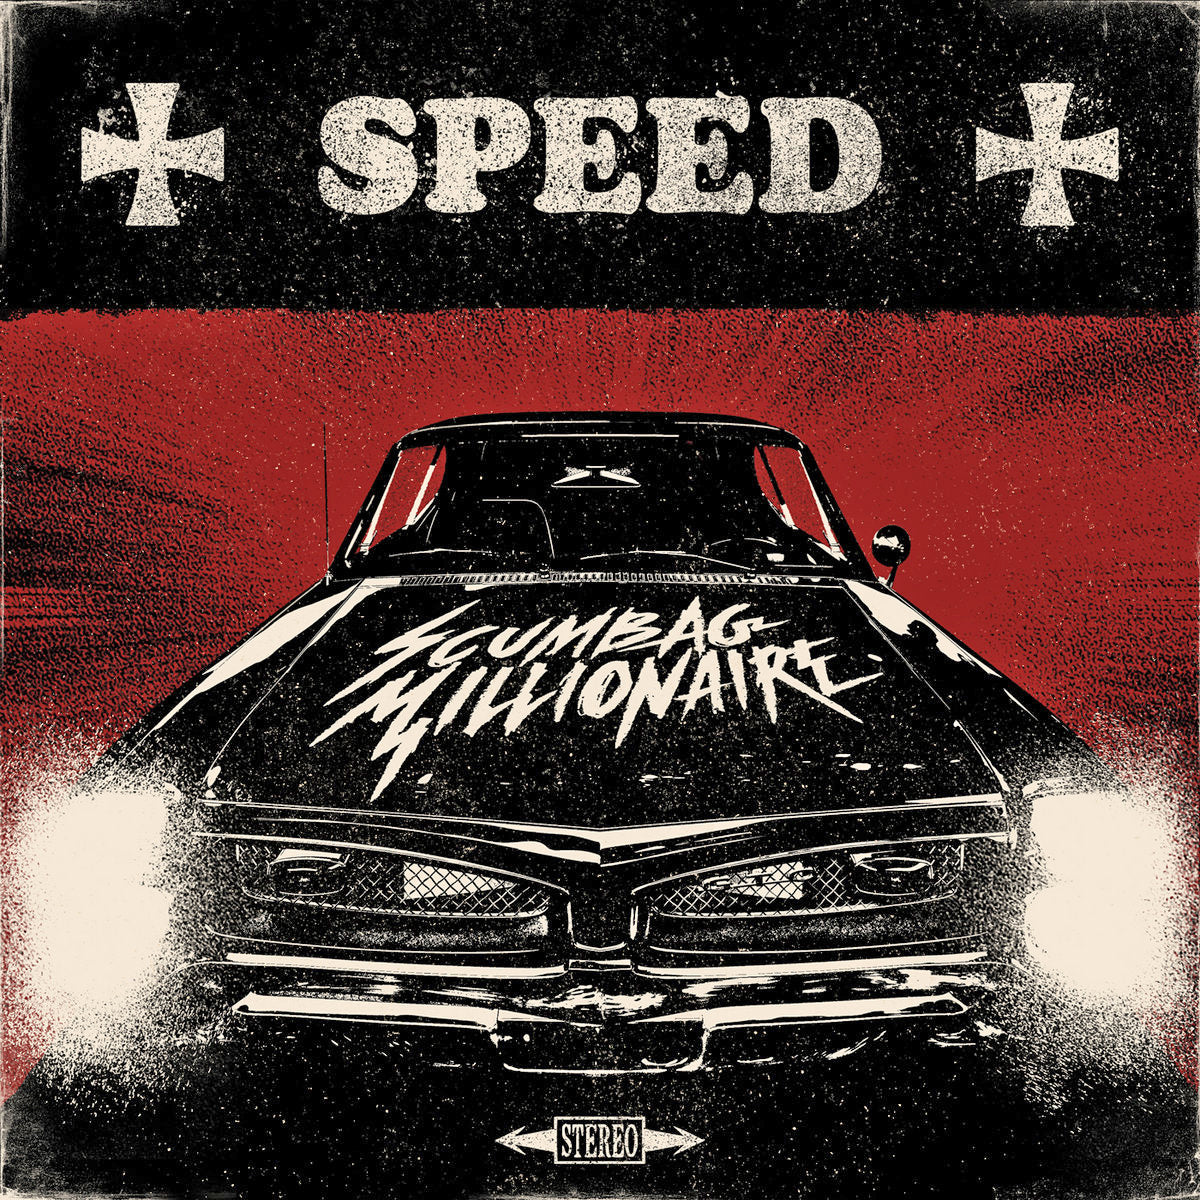 Scumbag Millionaire- Speed LP ~RARE CLEAR VINYL WITH BLACK SMOKE!